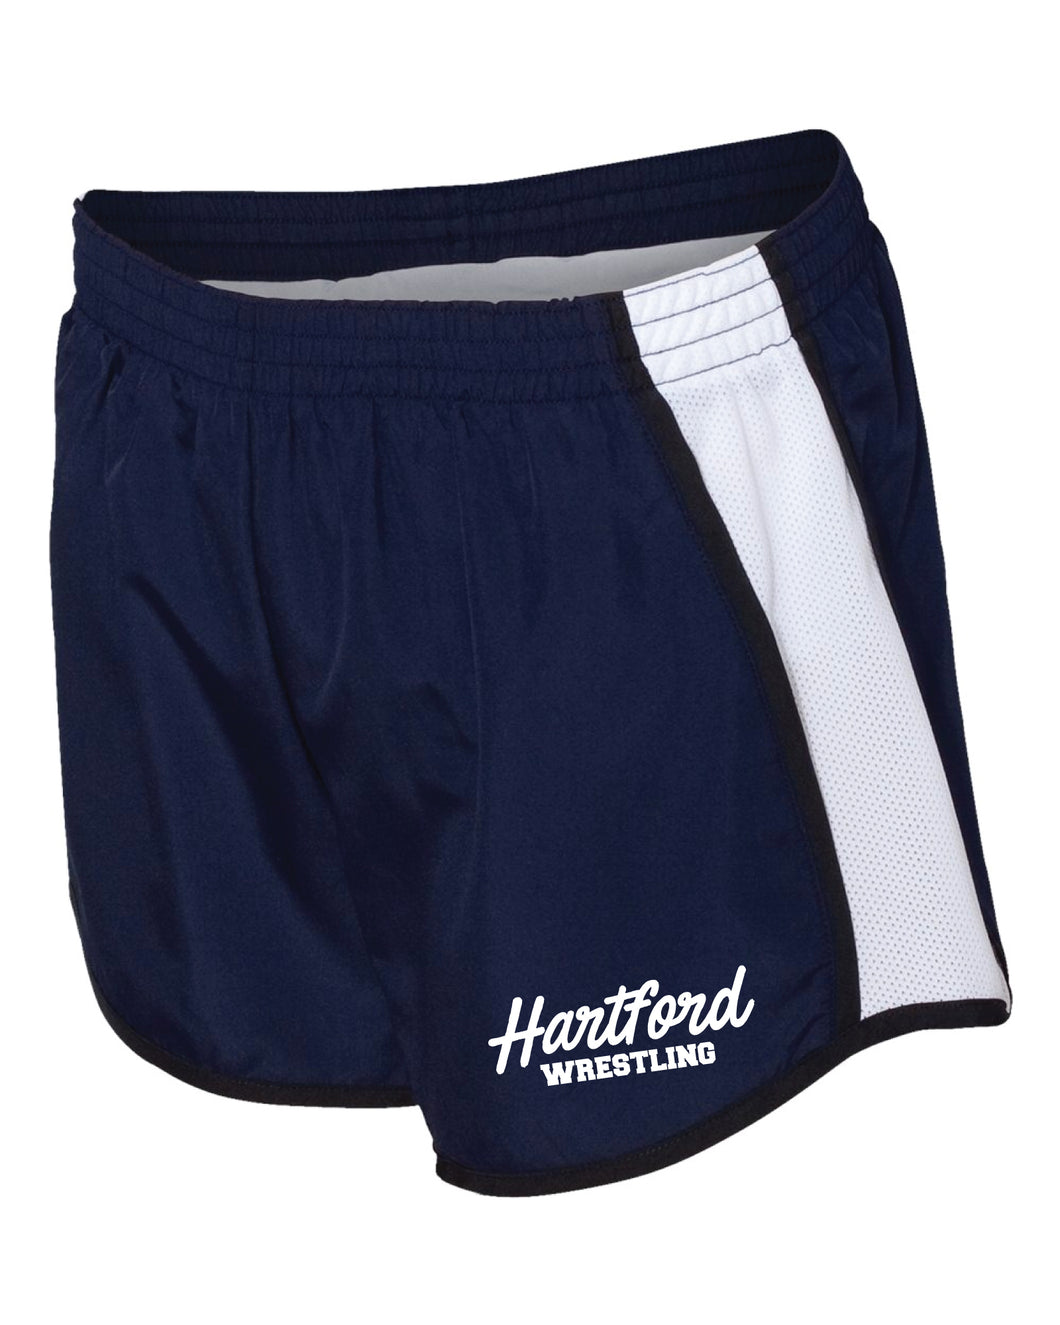 Hartford Owls Wrestling Ladies Athletic Shorts - Navy - 5KounT2018